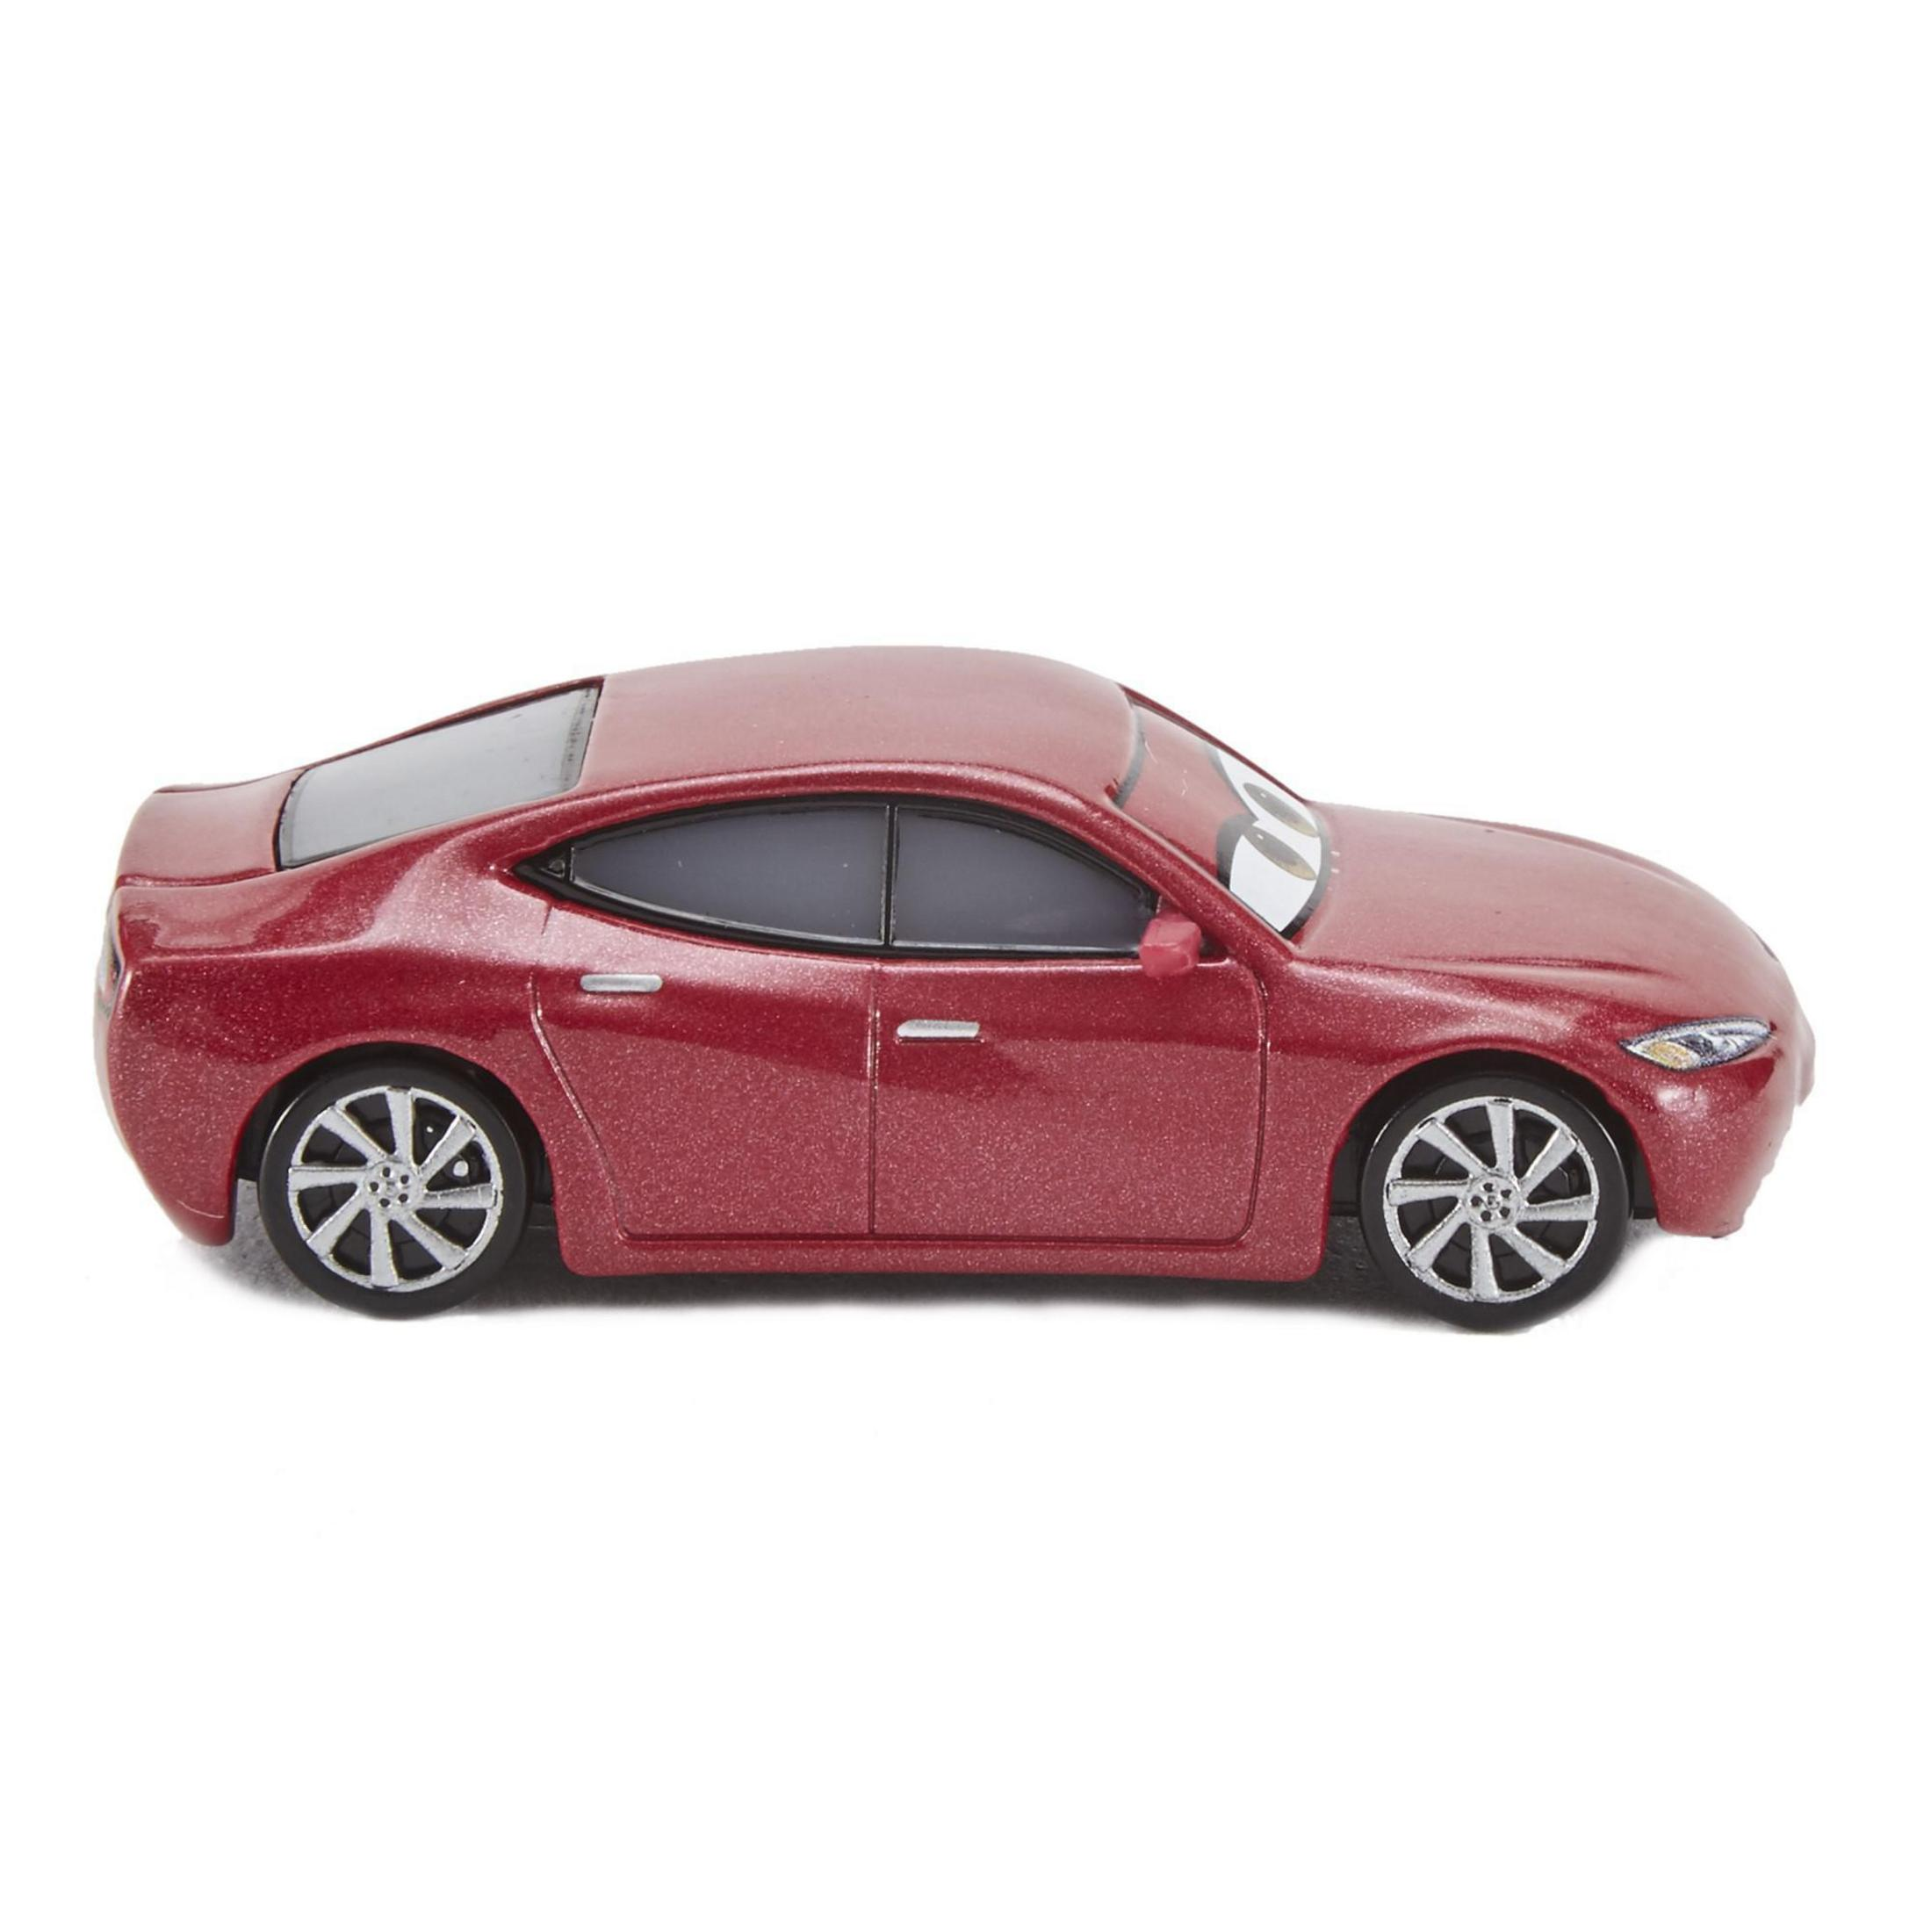 CARS GXG43 DIE-CAST CHARACTER FAHRZEUG SORT Spielzeugauto Mehrfarbig